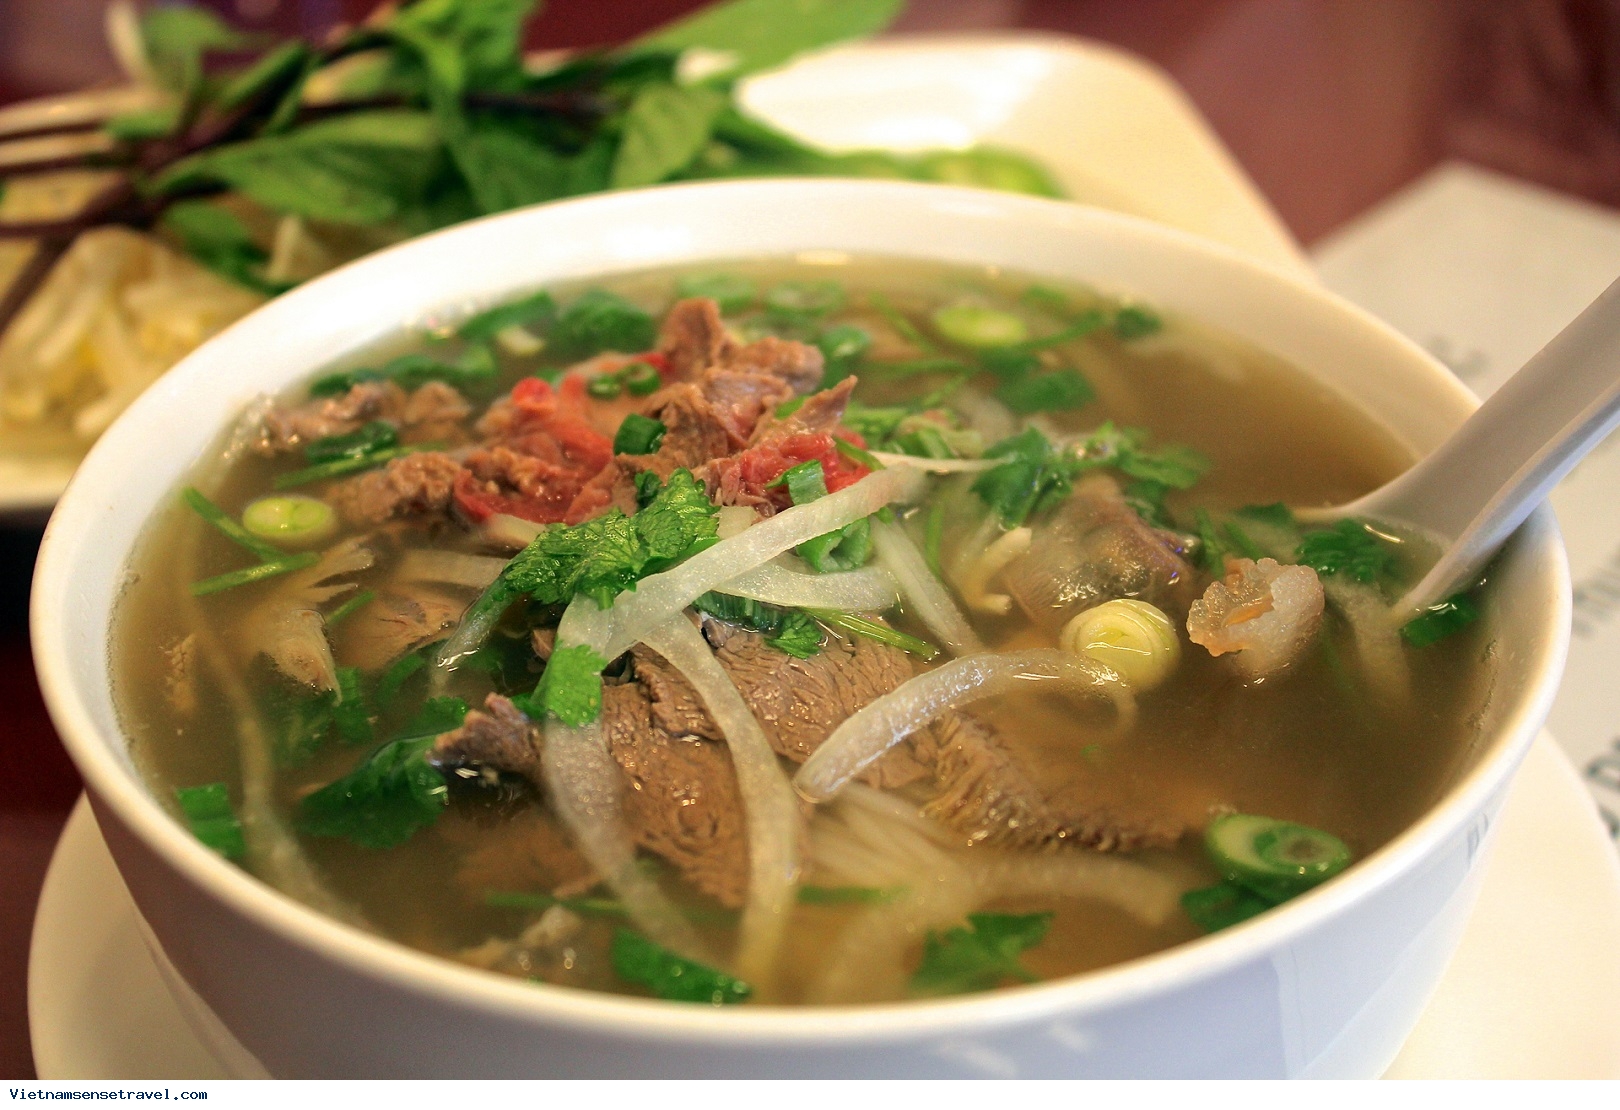 Top 10 Street Food In Viet Nam - Ảnh 1